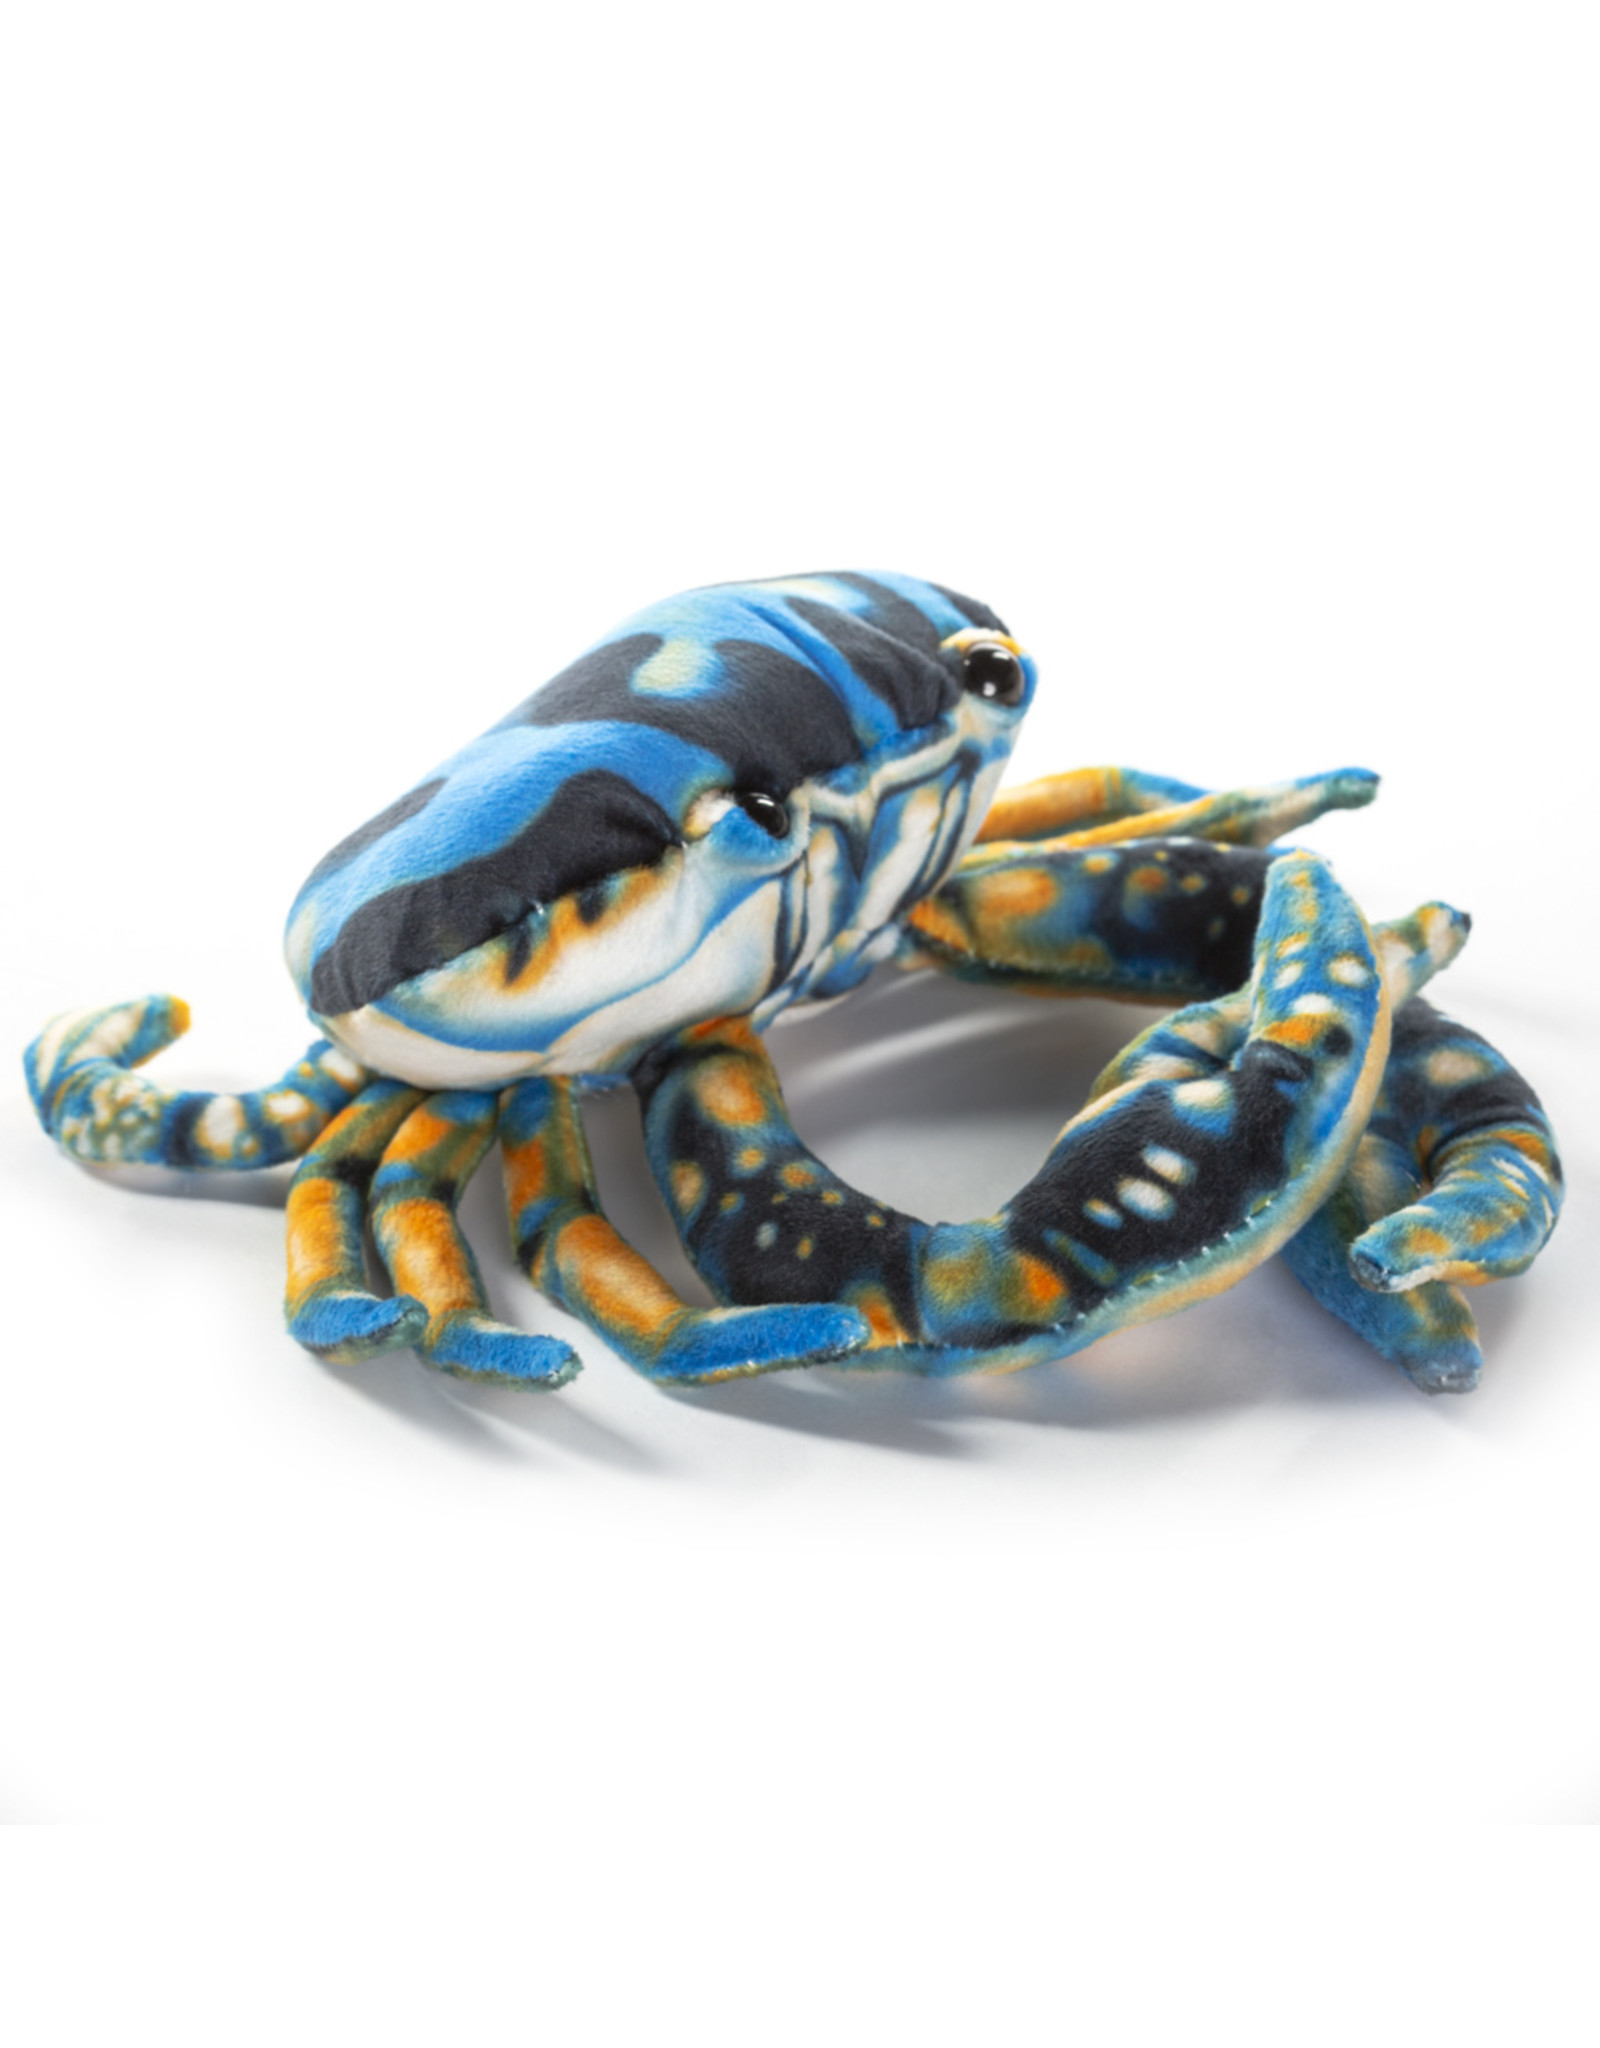 Blue Crab Plush